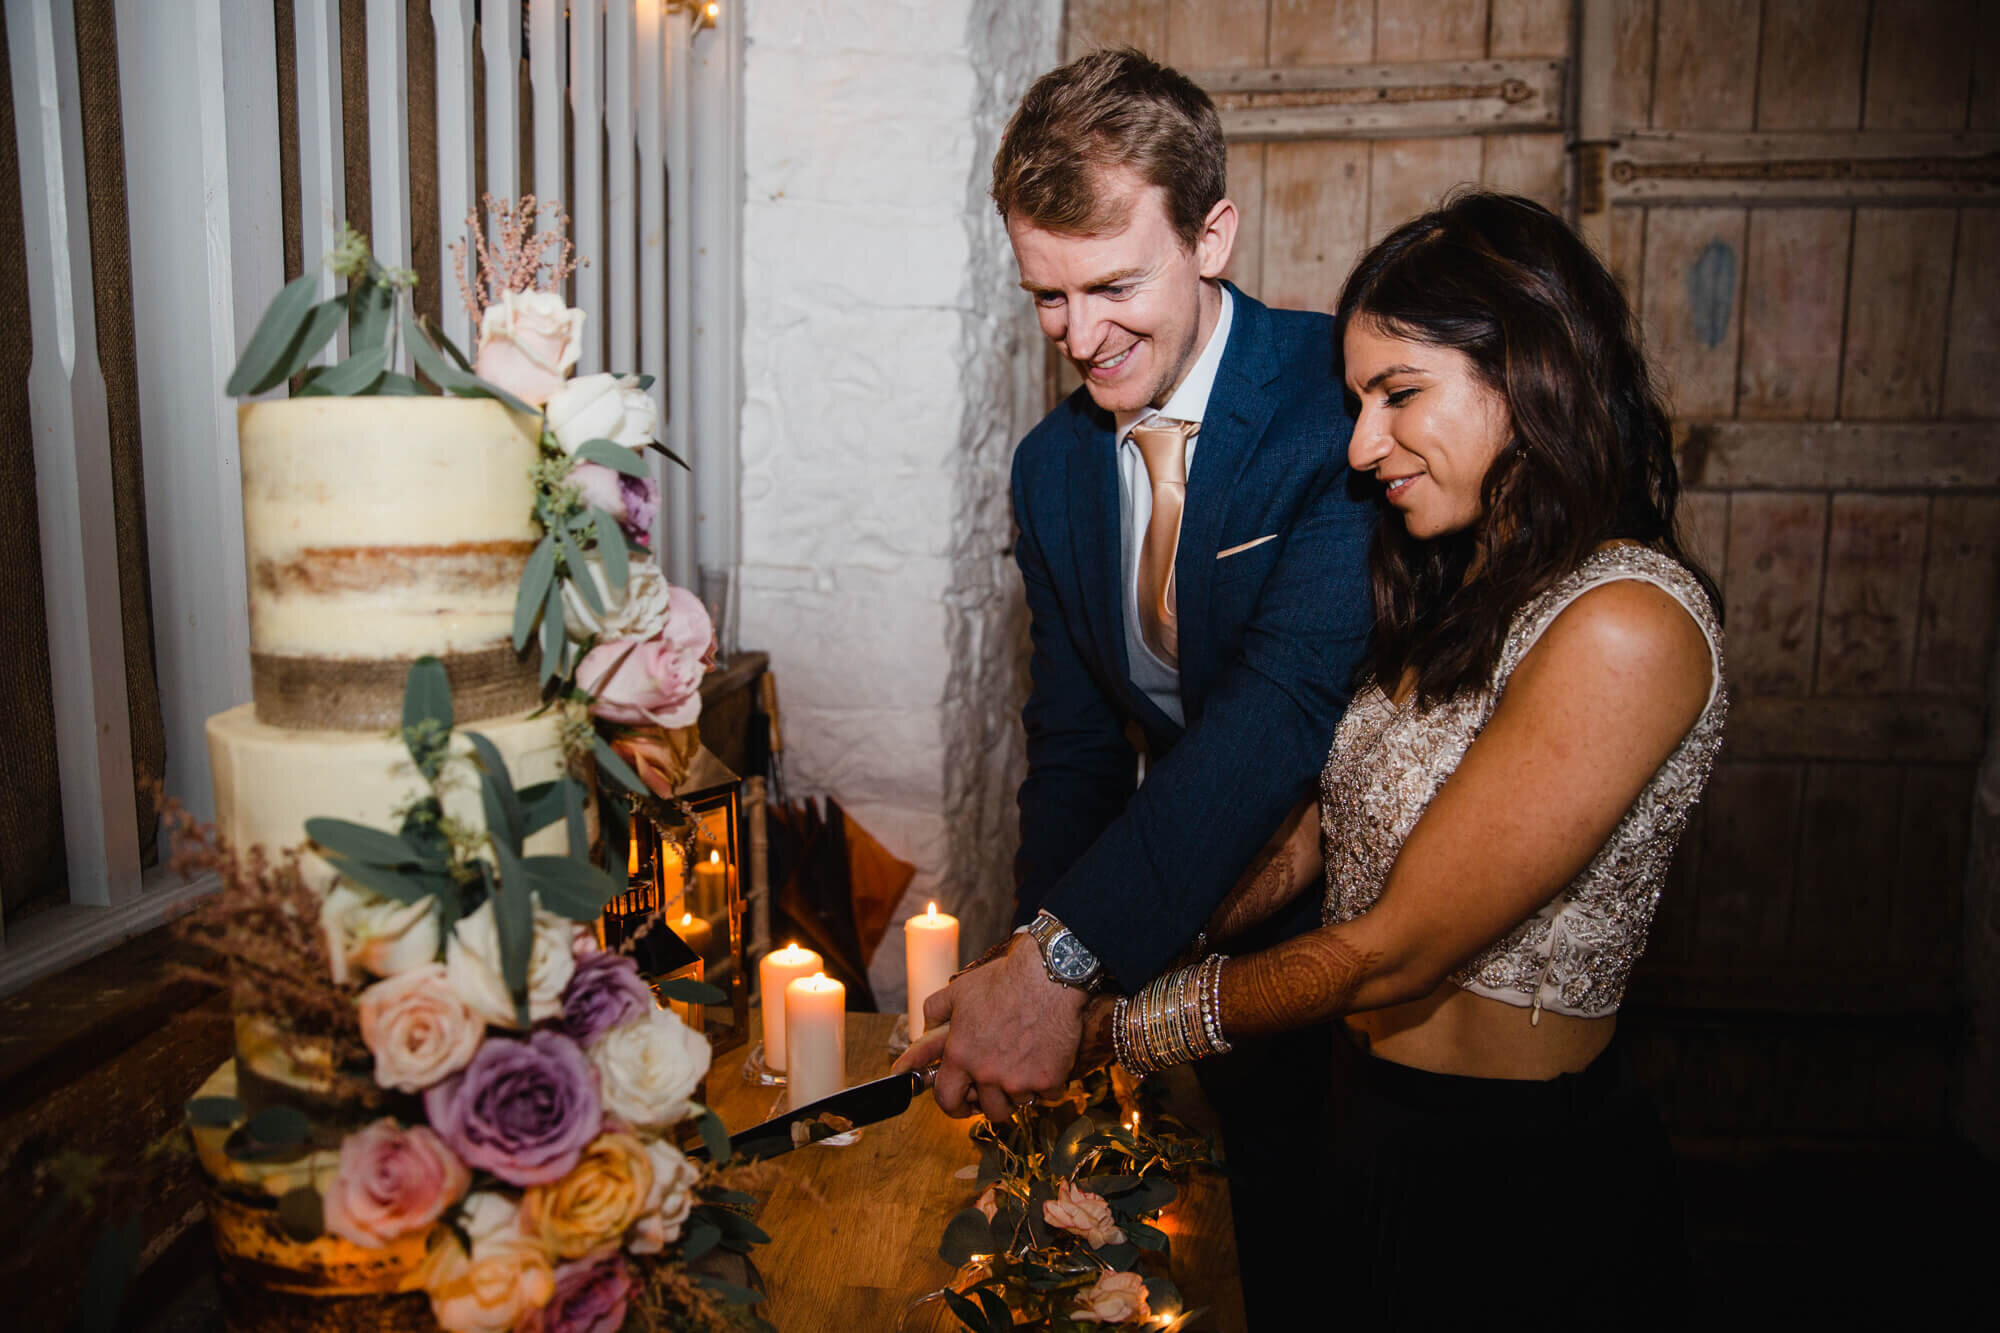 wedded couple cut award winning cake together at Askham Hall